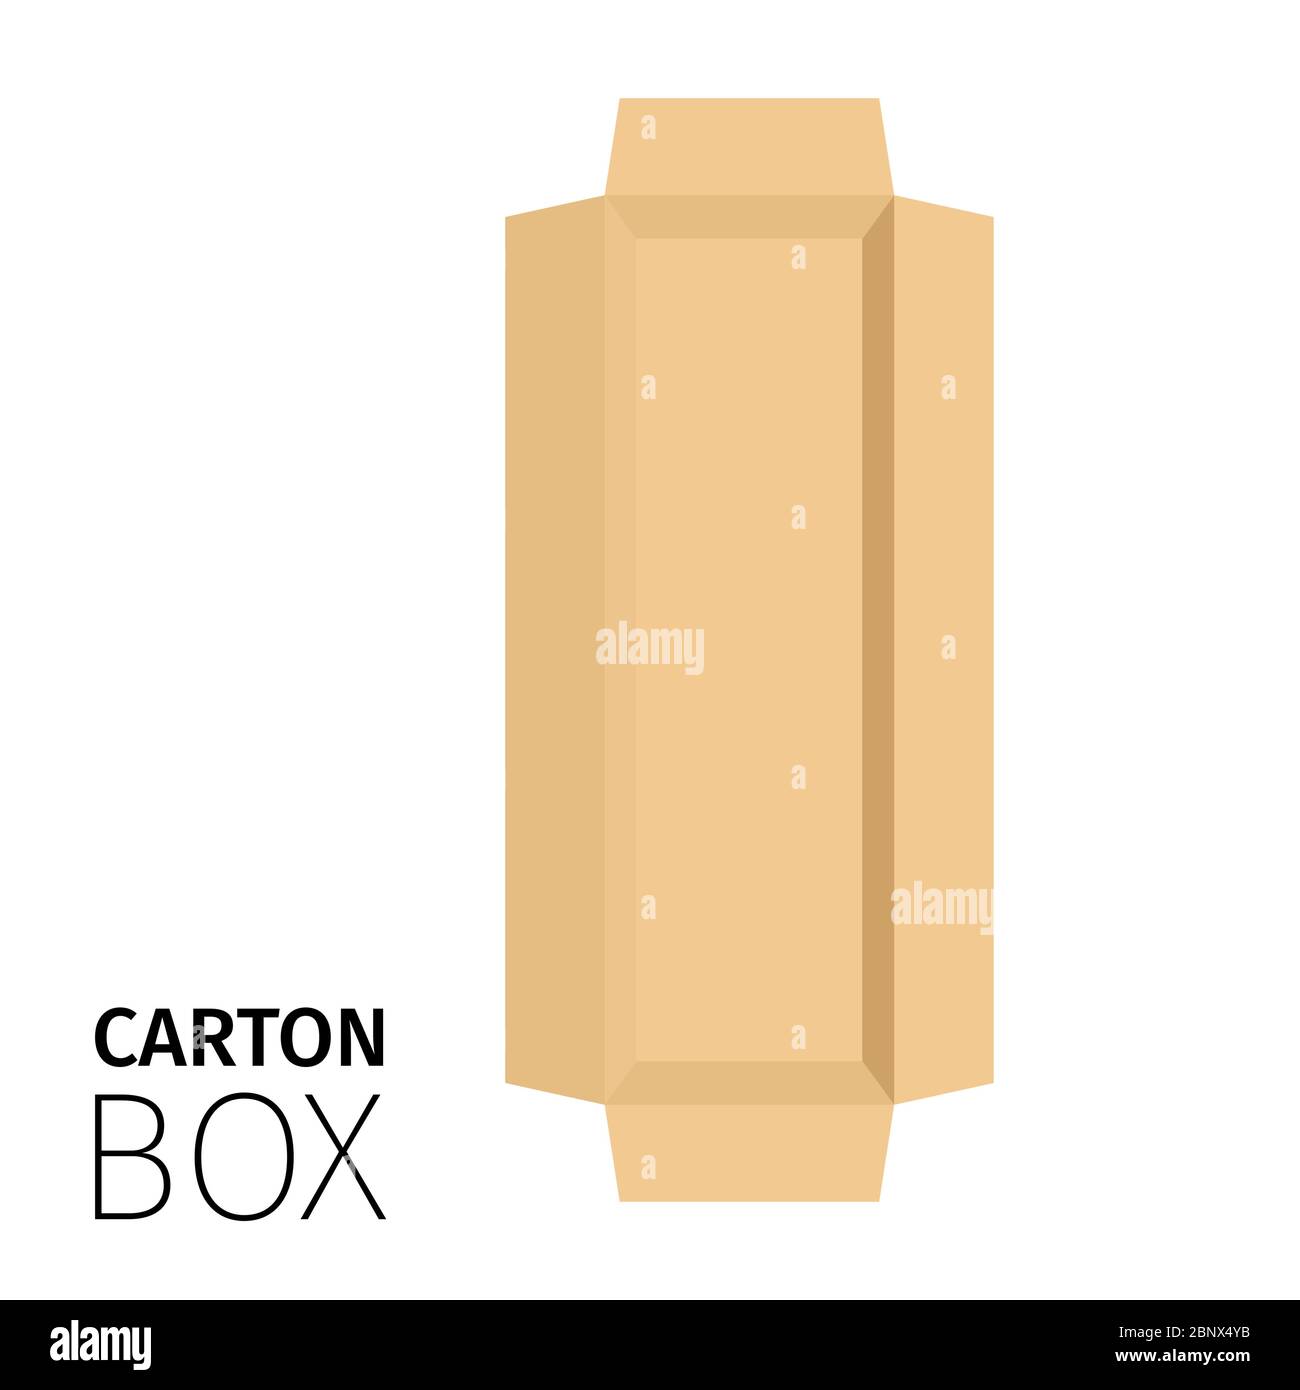 Carton rectangular box pack. Top view. Opened box vector illustration Stock Vector